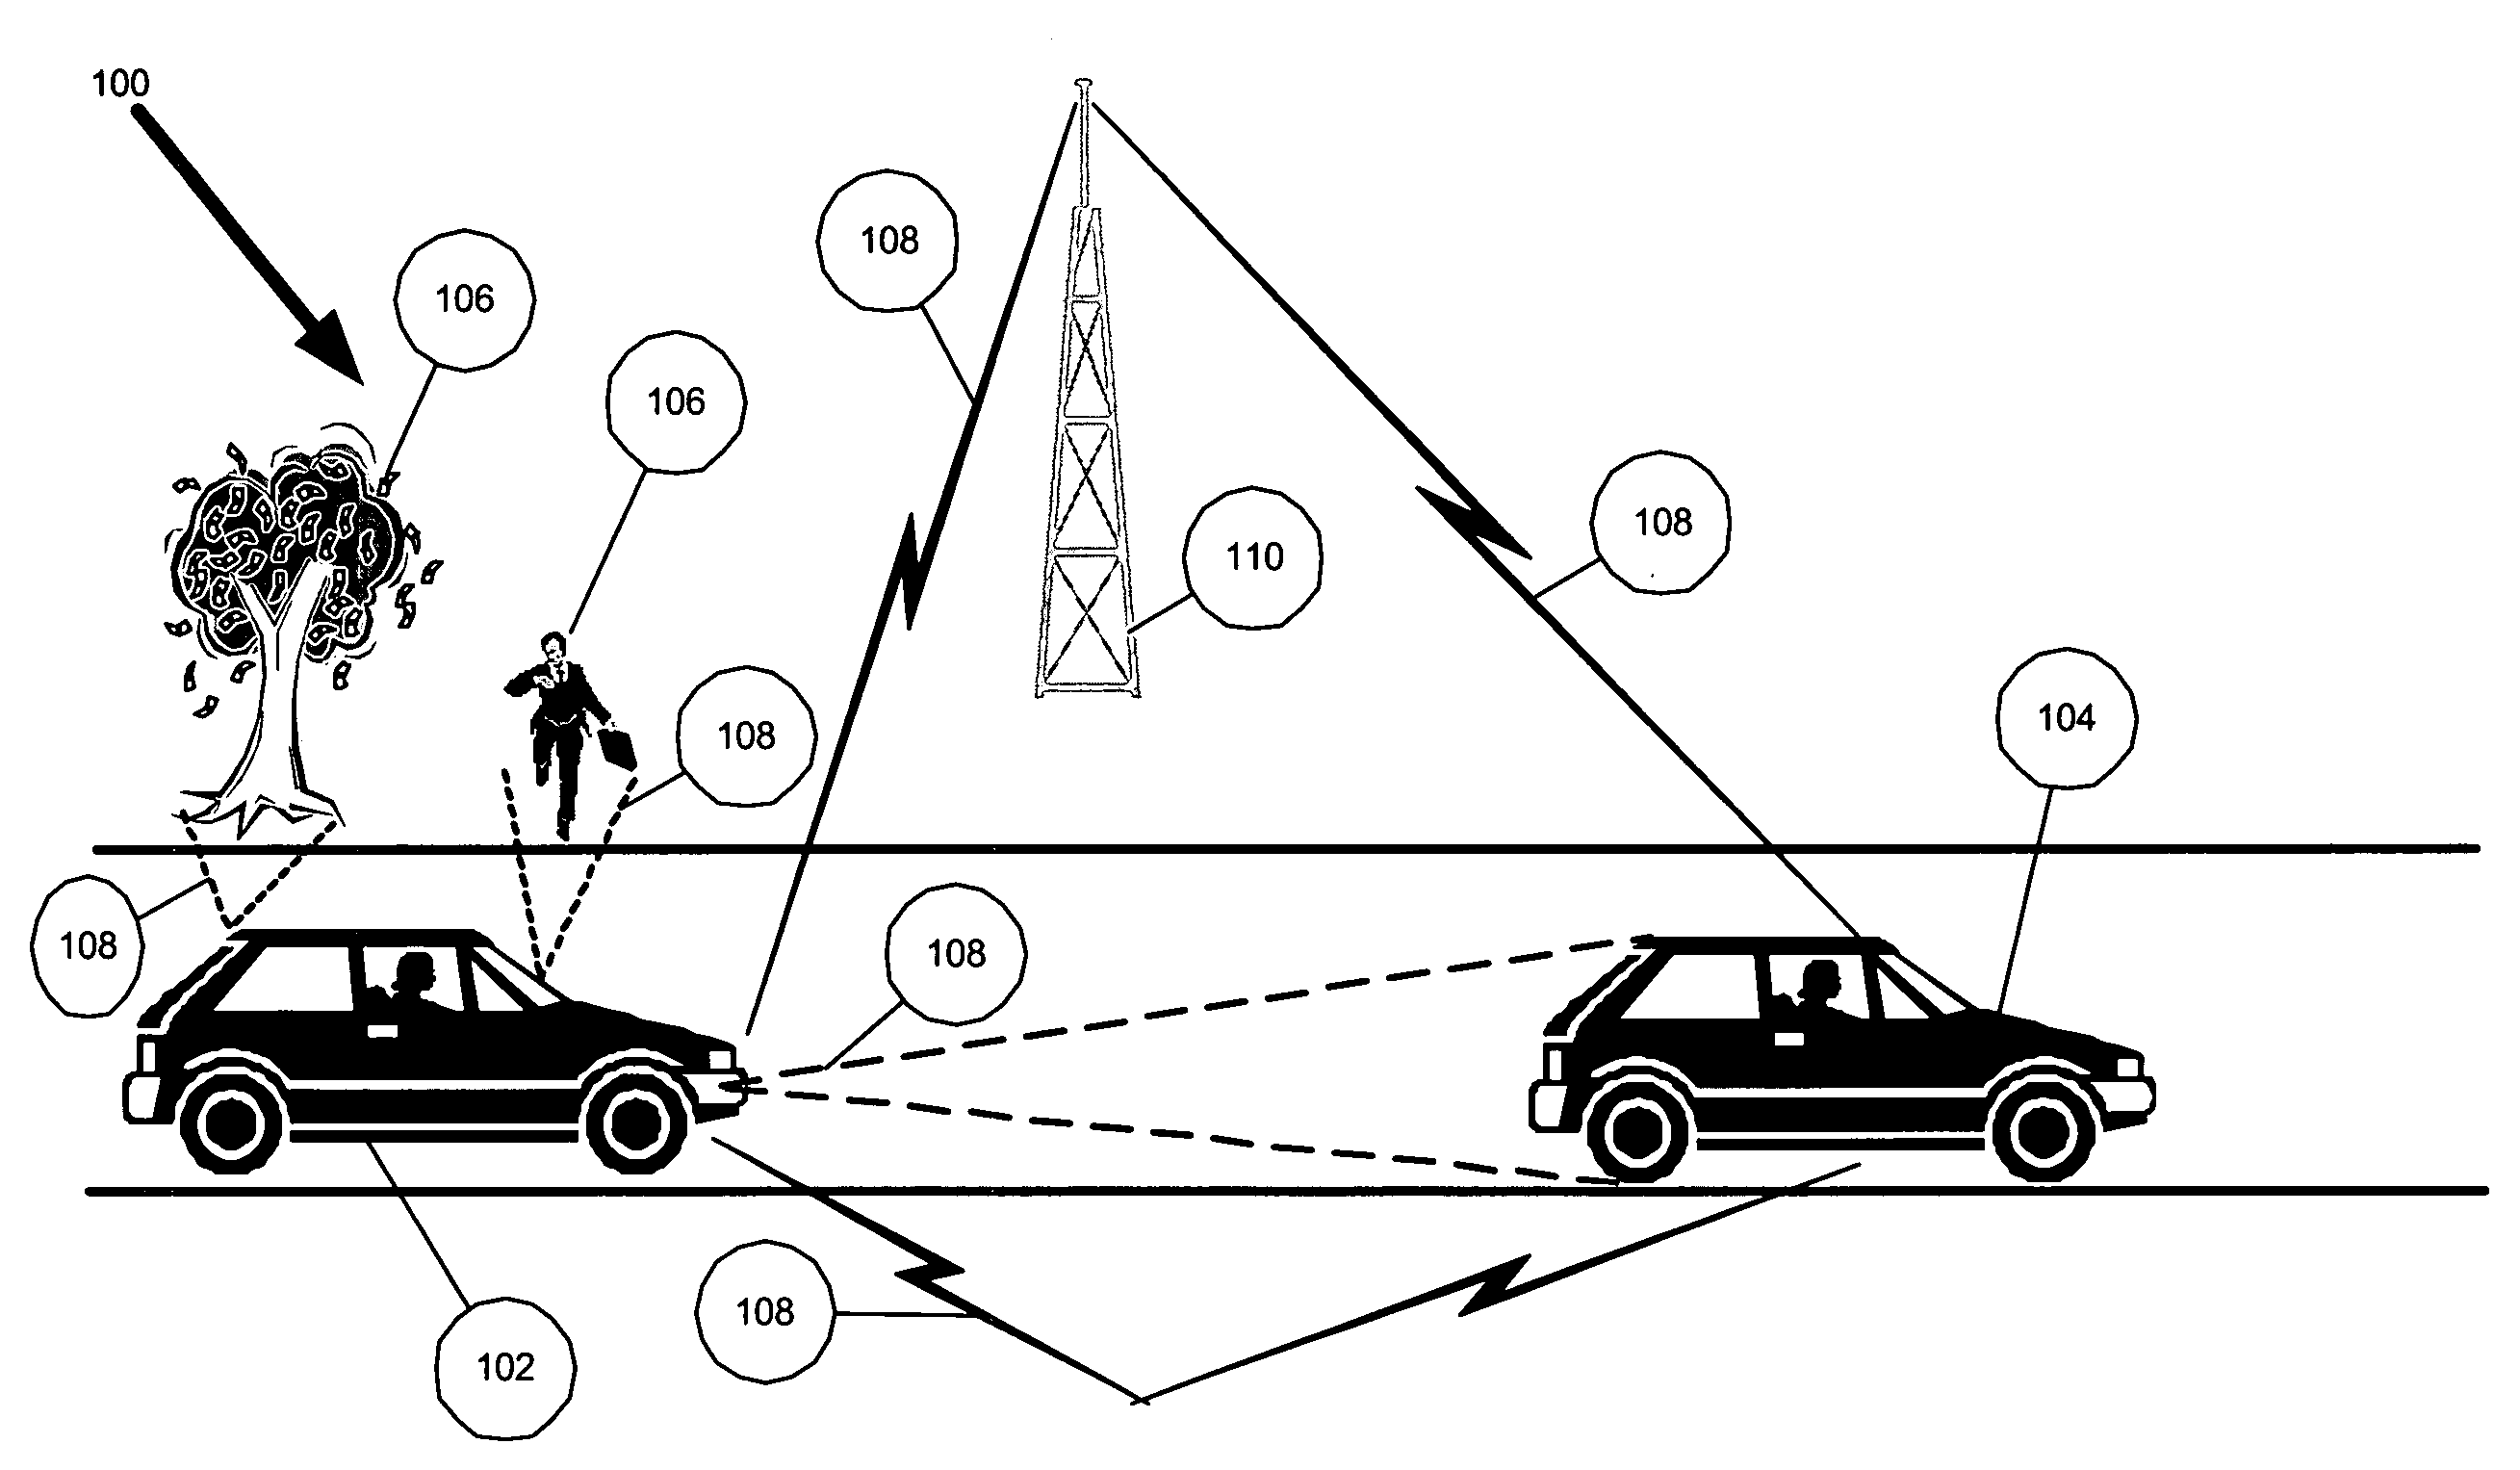 Multi-sensor integration for a vehicle